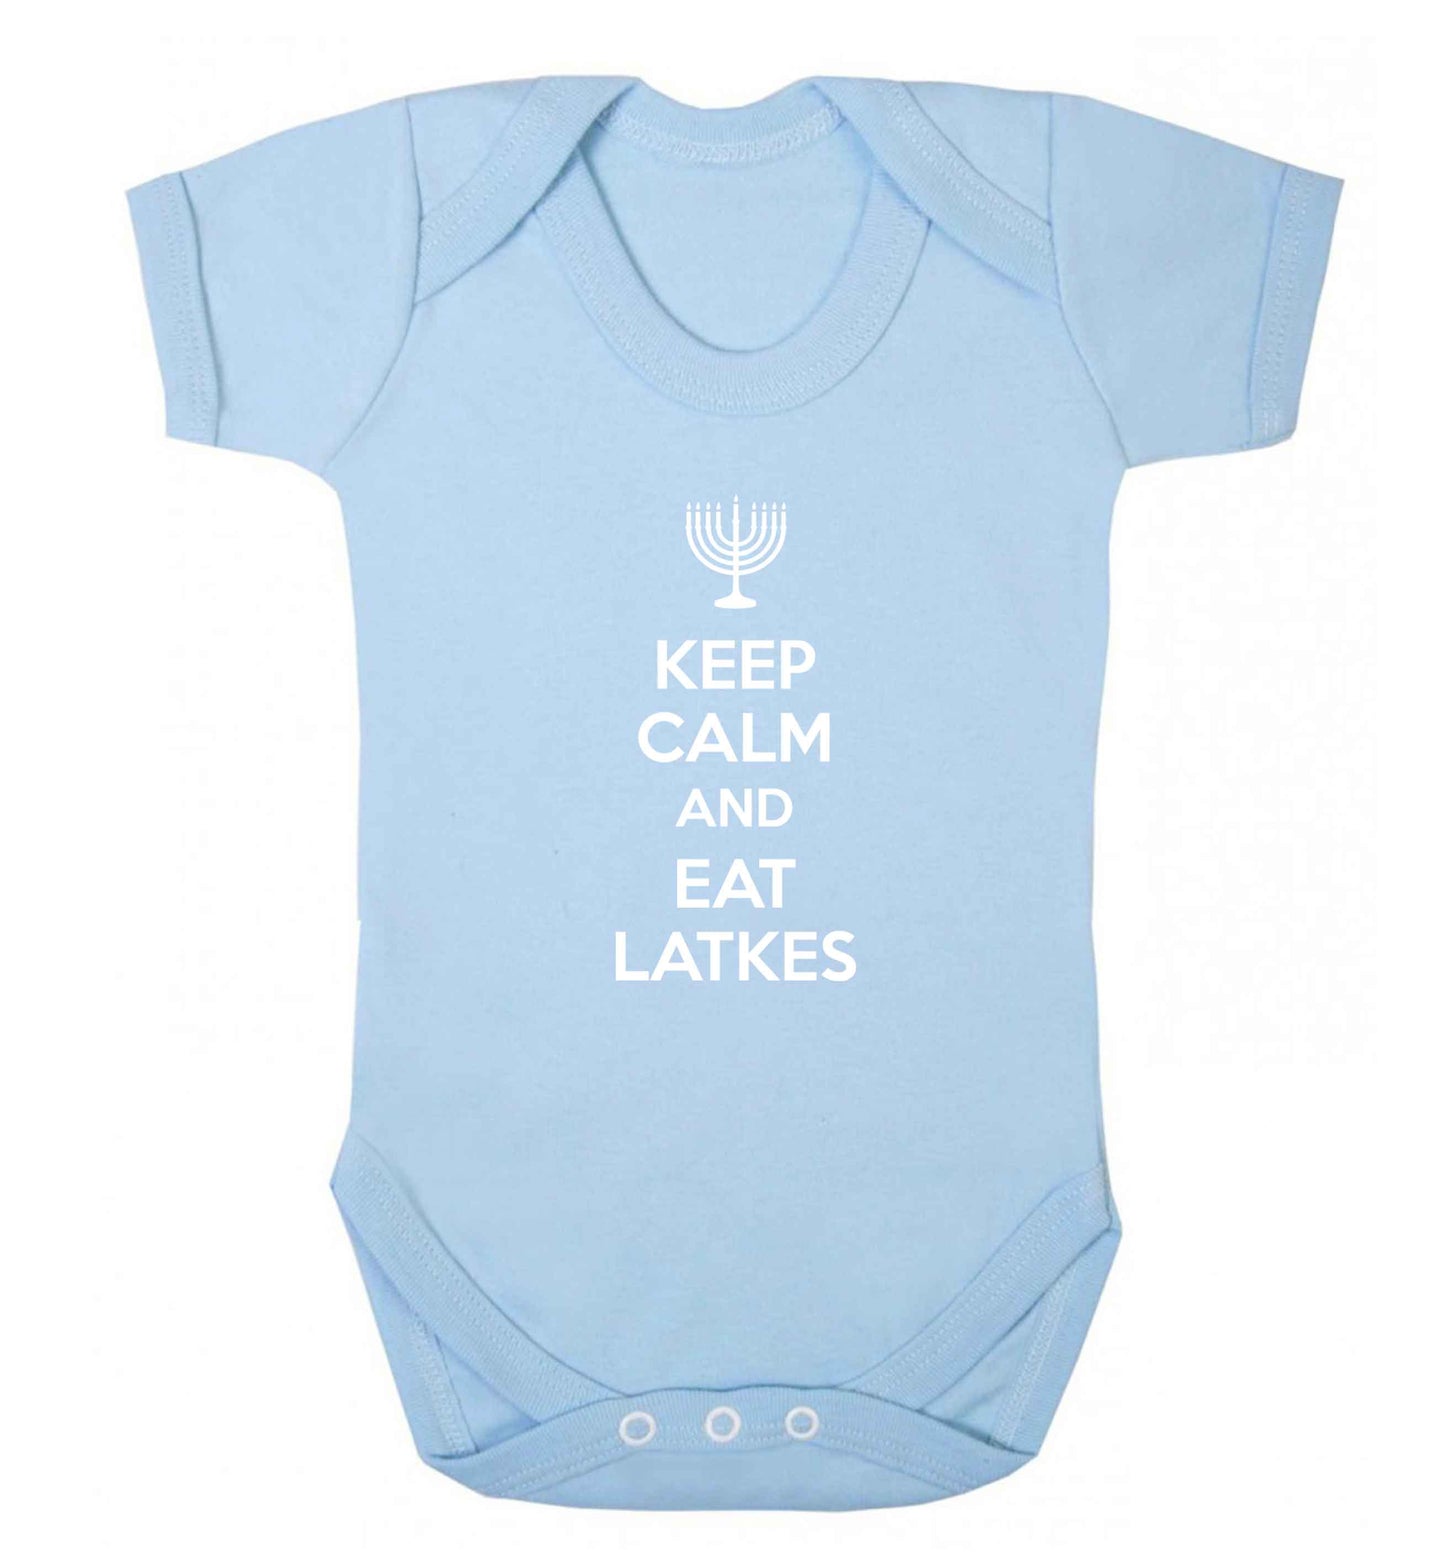 Keep calm and eat latkes baby vest pale blue 18-24 months